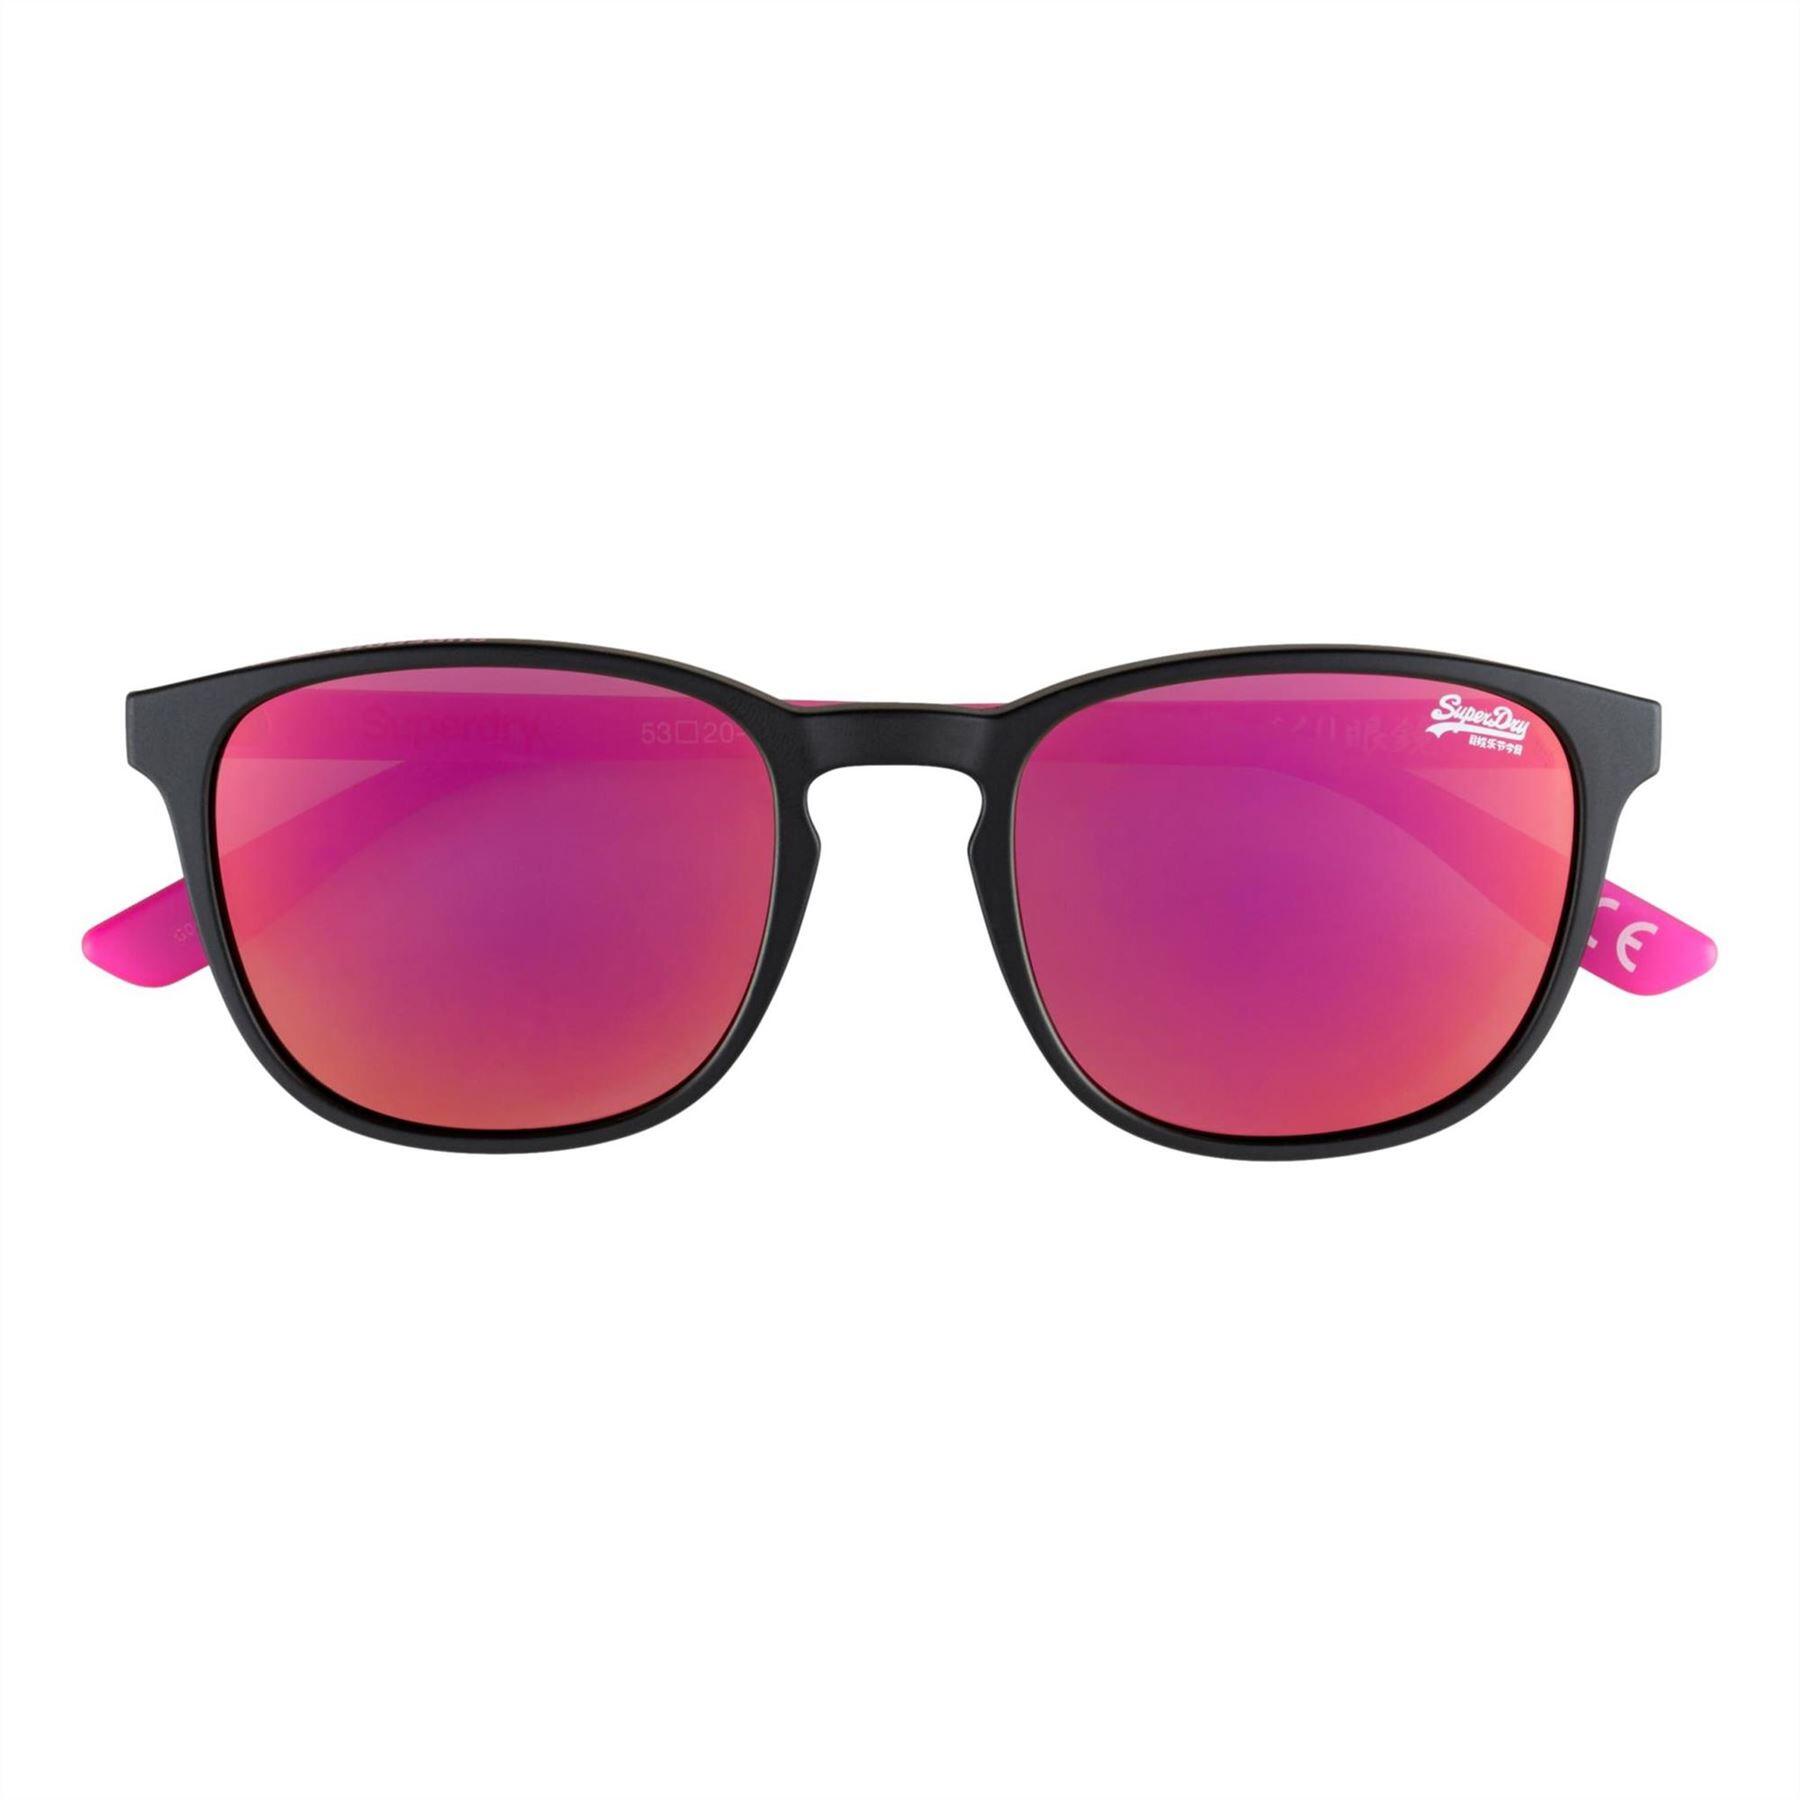 Superdry Summer 6 Sunglasses - Pink / Black 1/2